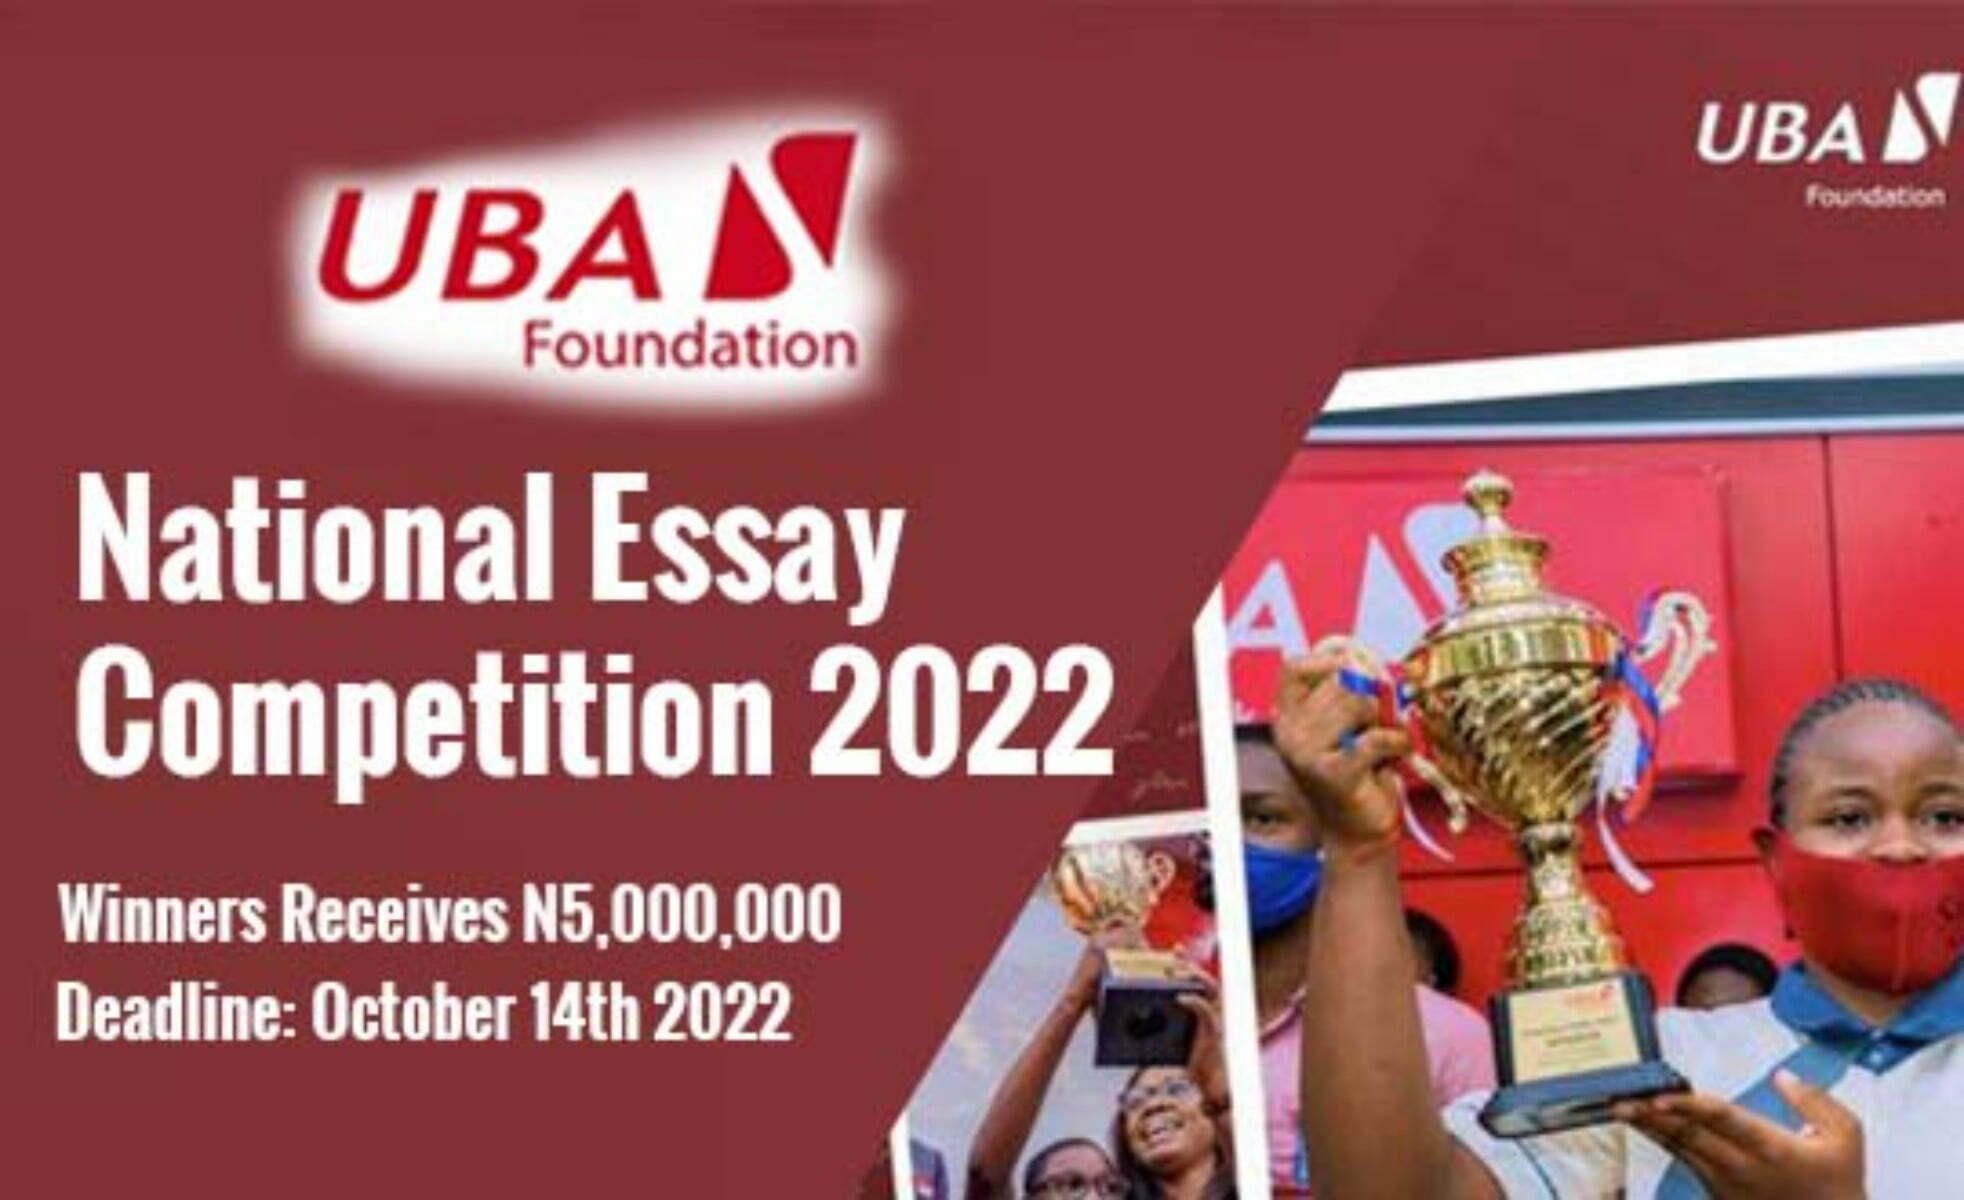 uba essay competition 2022 finalists